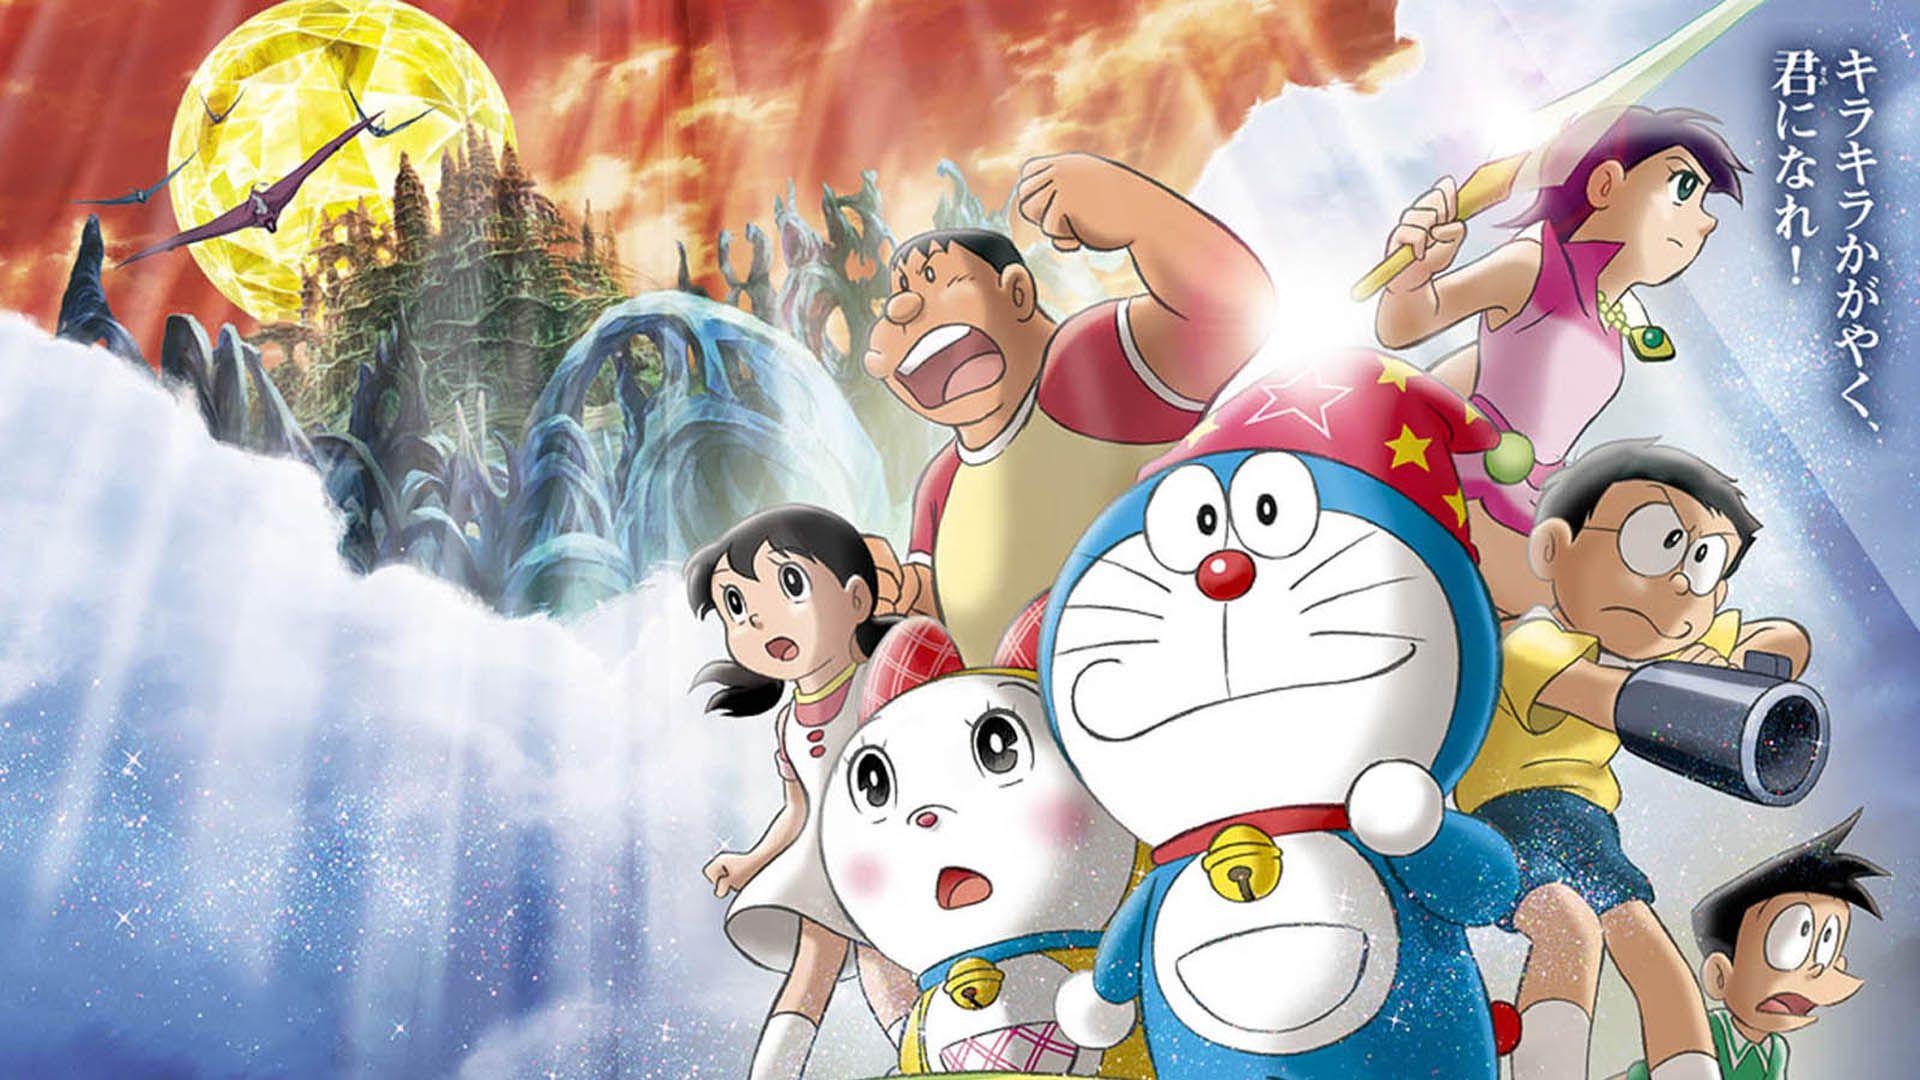 Doraemon #Nobita #Shizuka #Suneo #Gian #Dorami #Film. A Doraemon